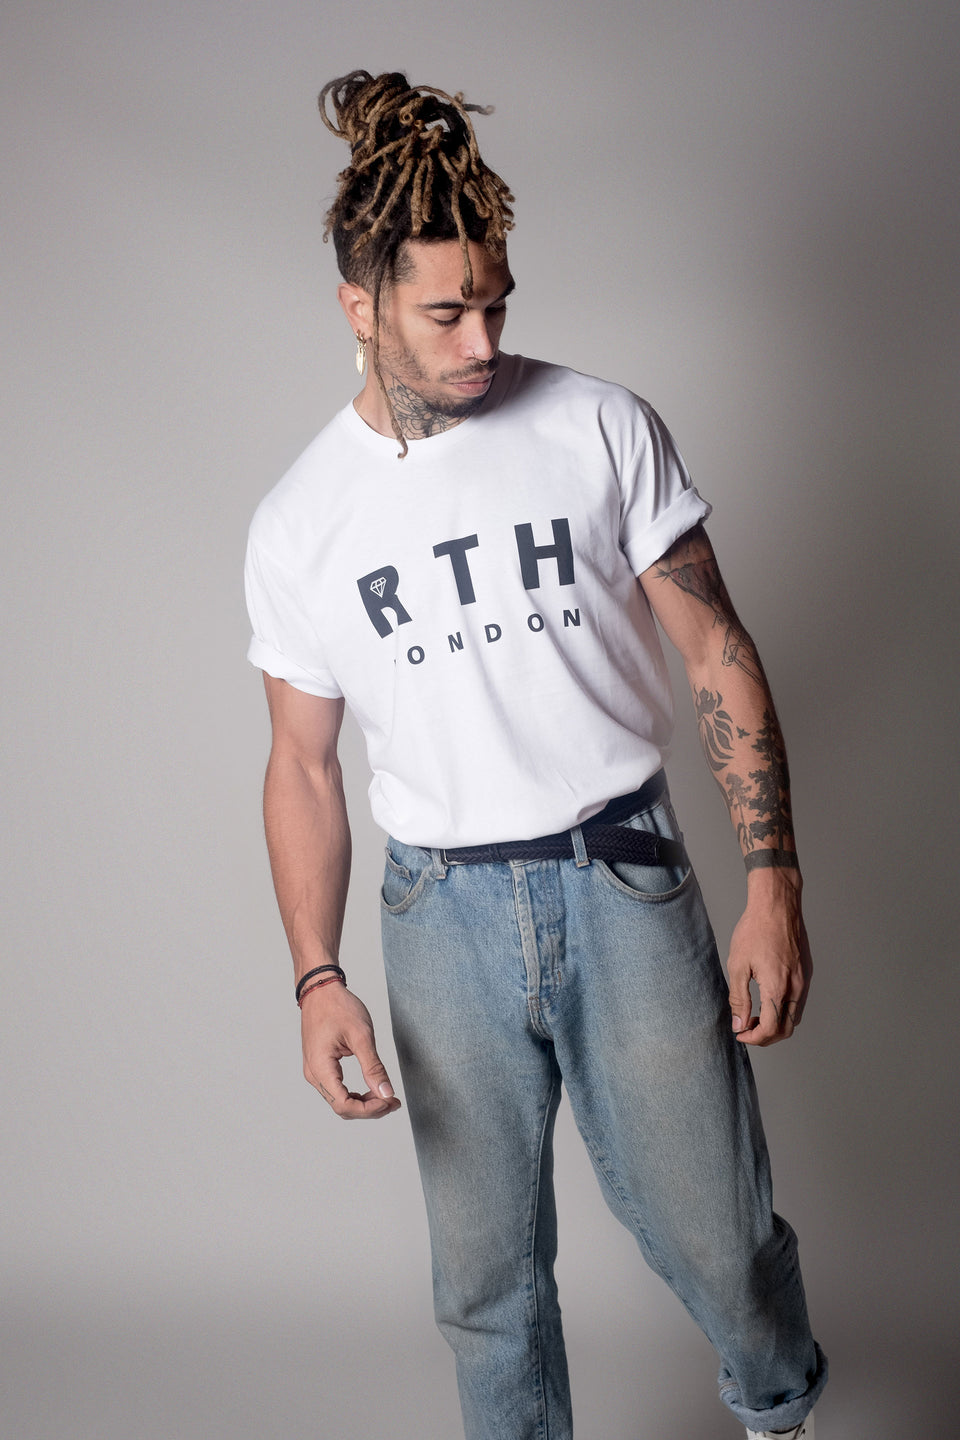 RTH London Classic T-shirt - White